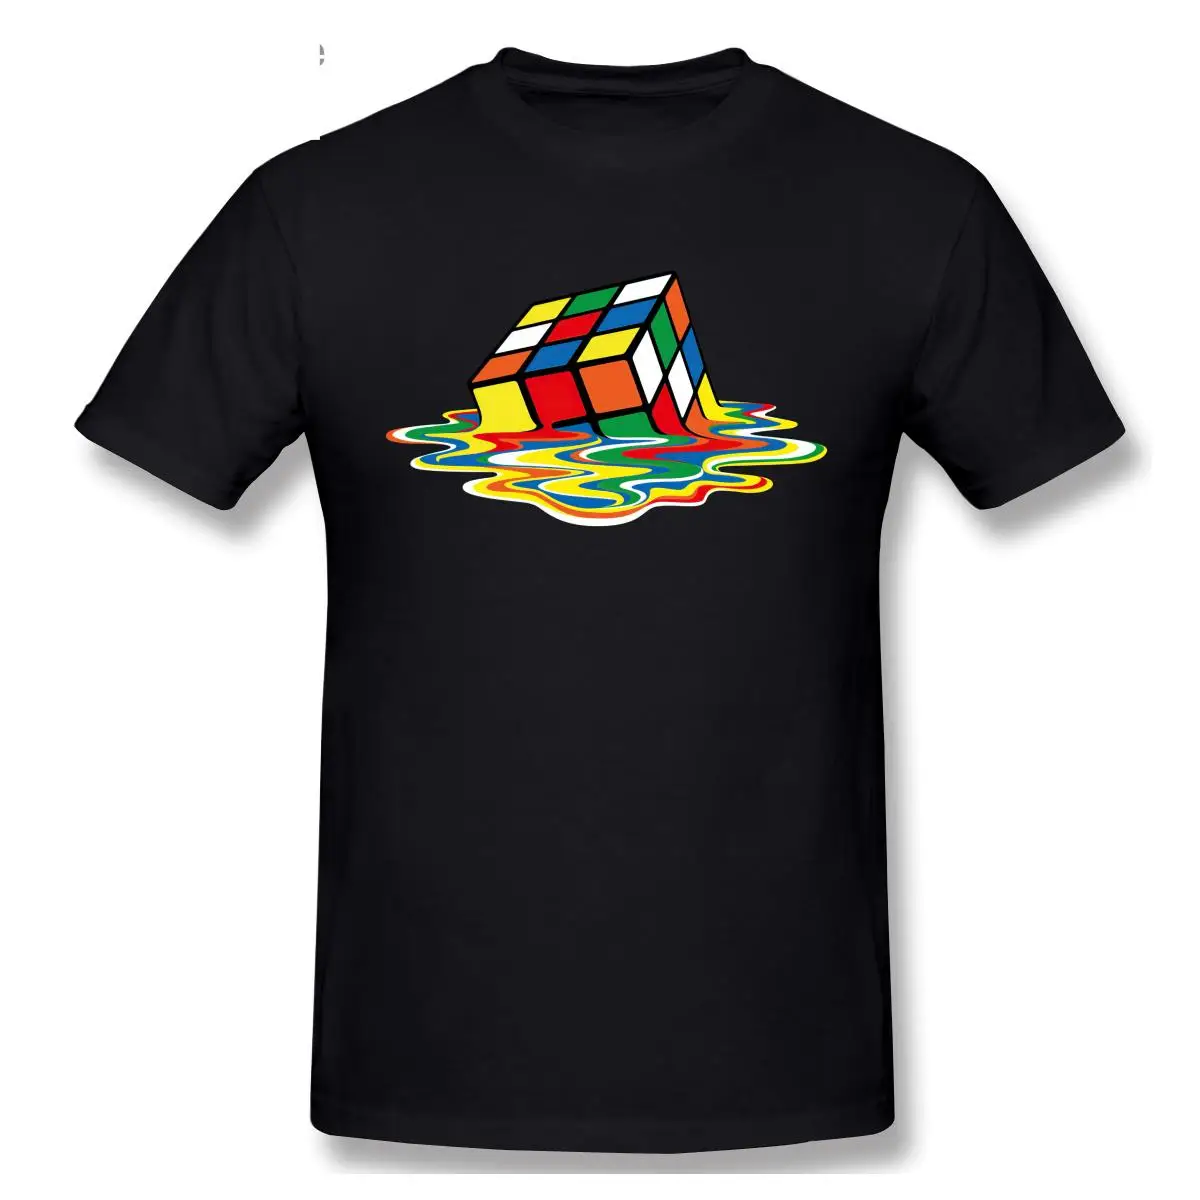 

Sheldon Cooper - Melting Rubik's Cube T-Shirt Short Sleeve Casual Men Fashion O-neck 100% Cotton T-Shirts Tee Top